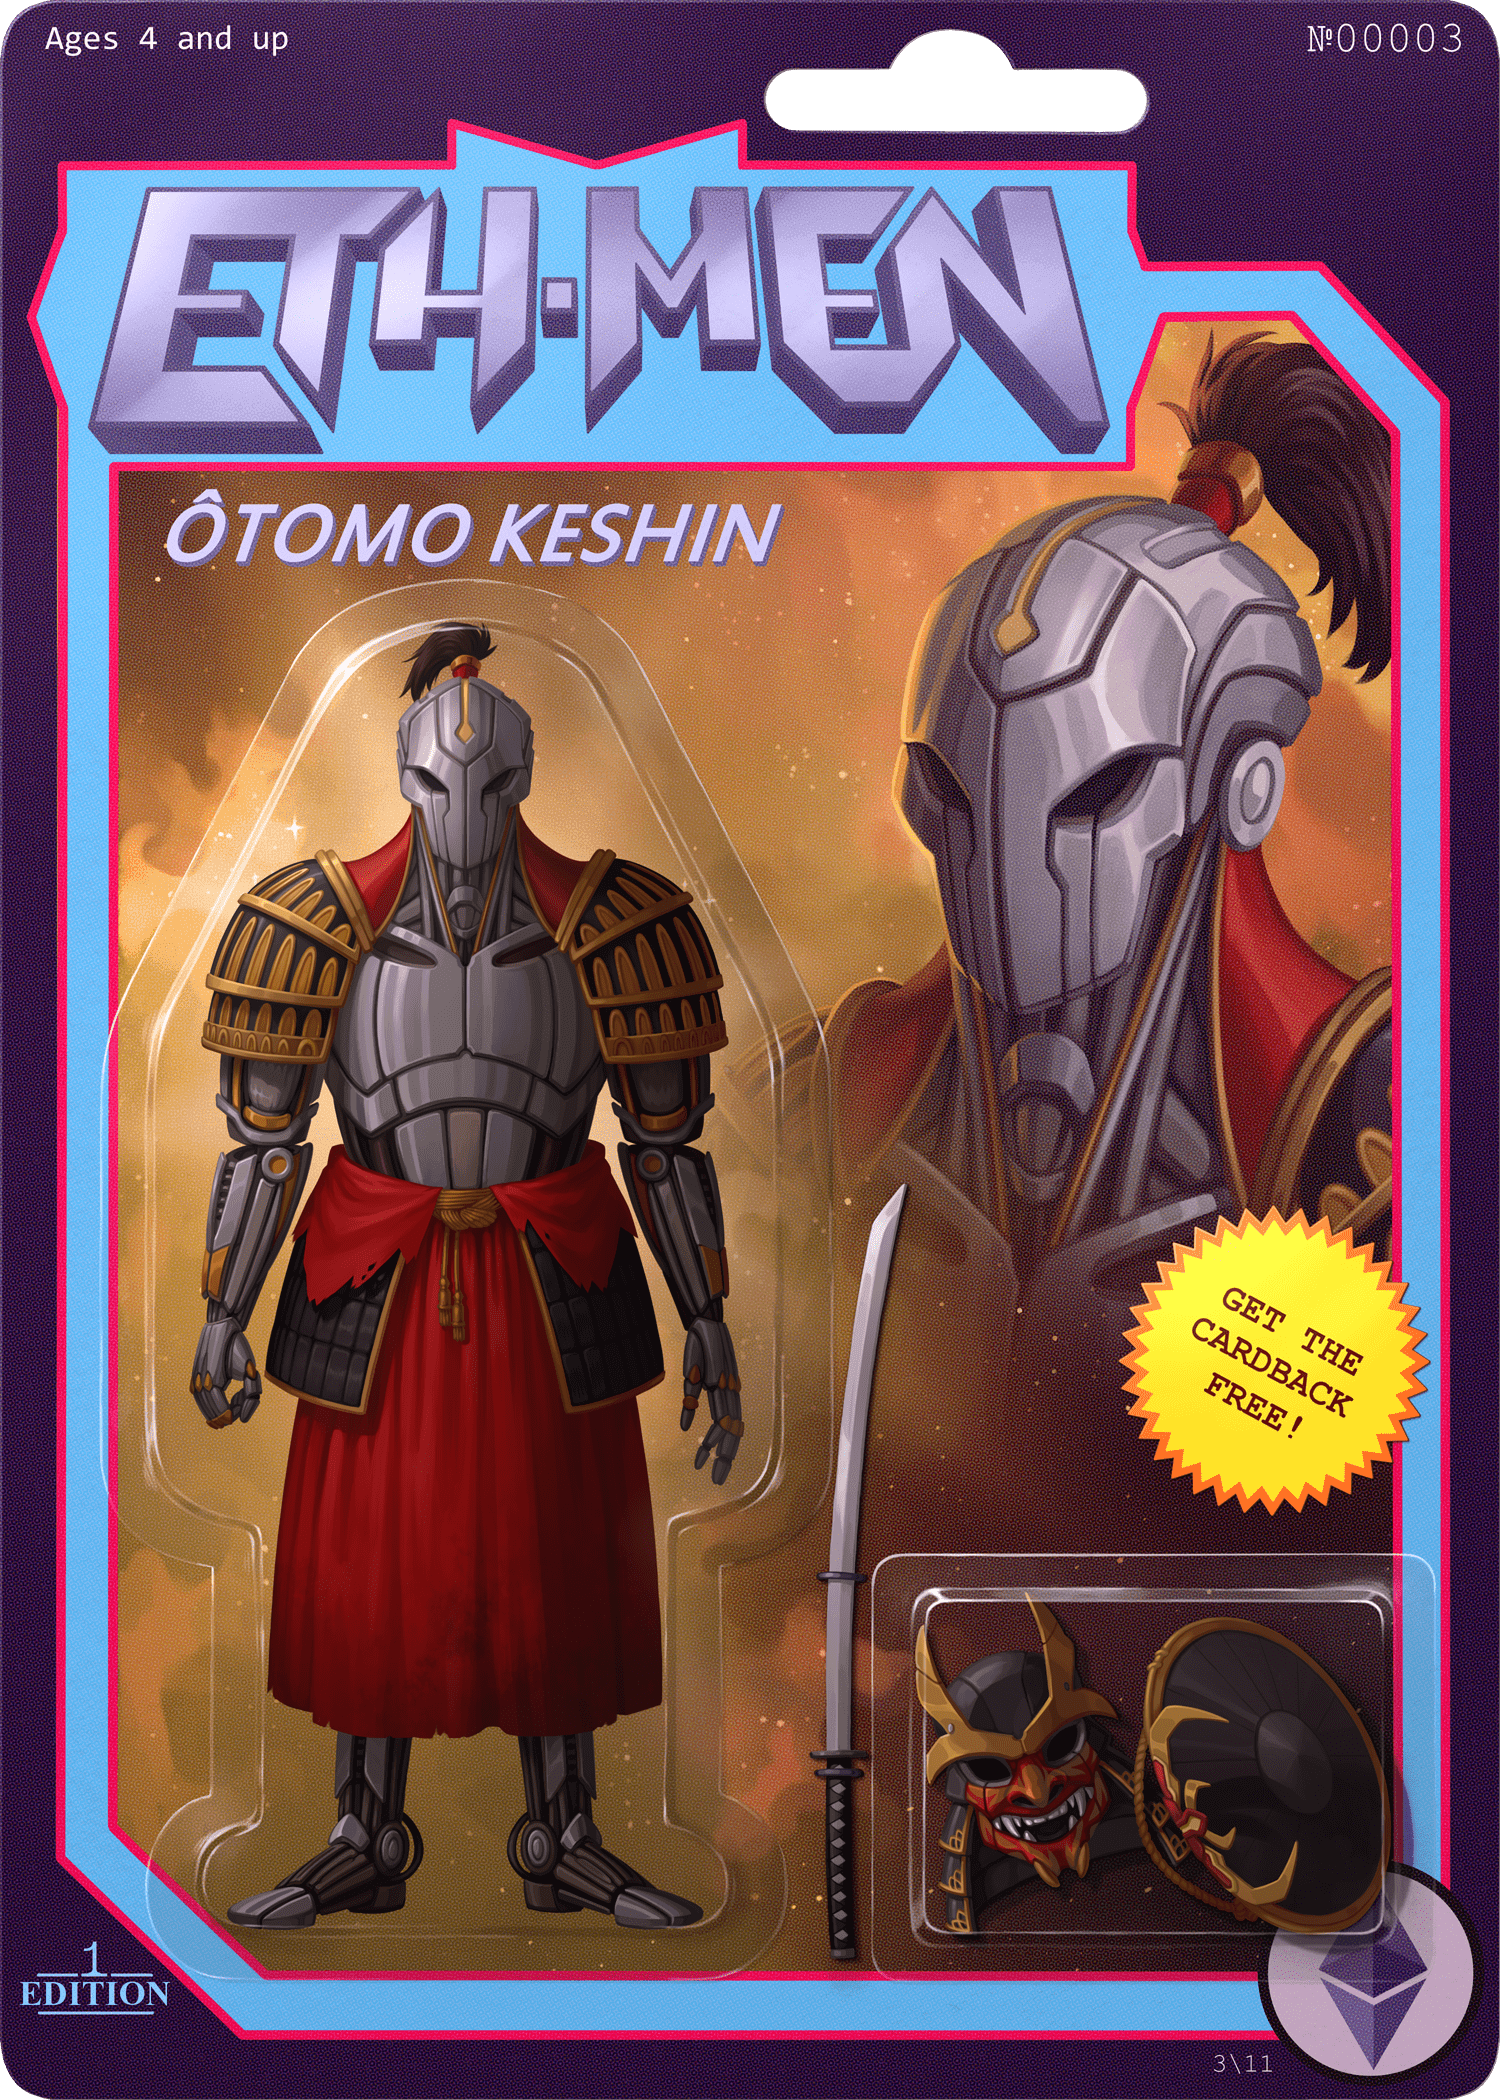 ETH-MEN/Ôtomo Keshin/№00003/1st edition